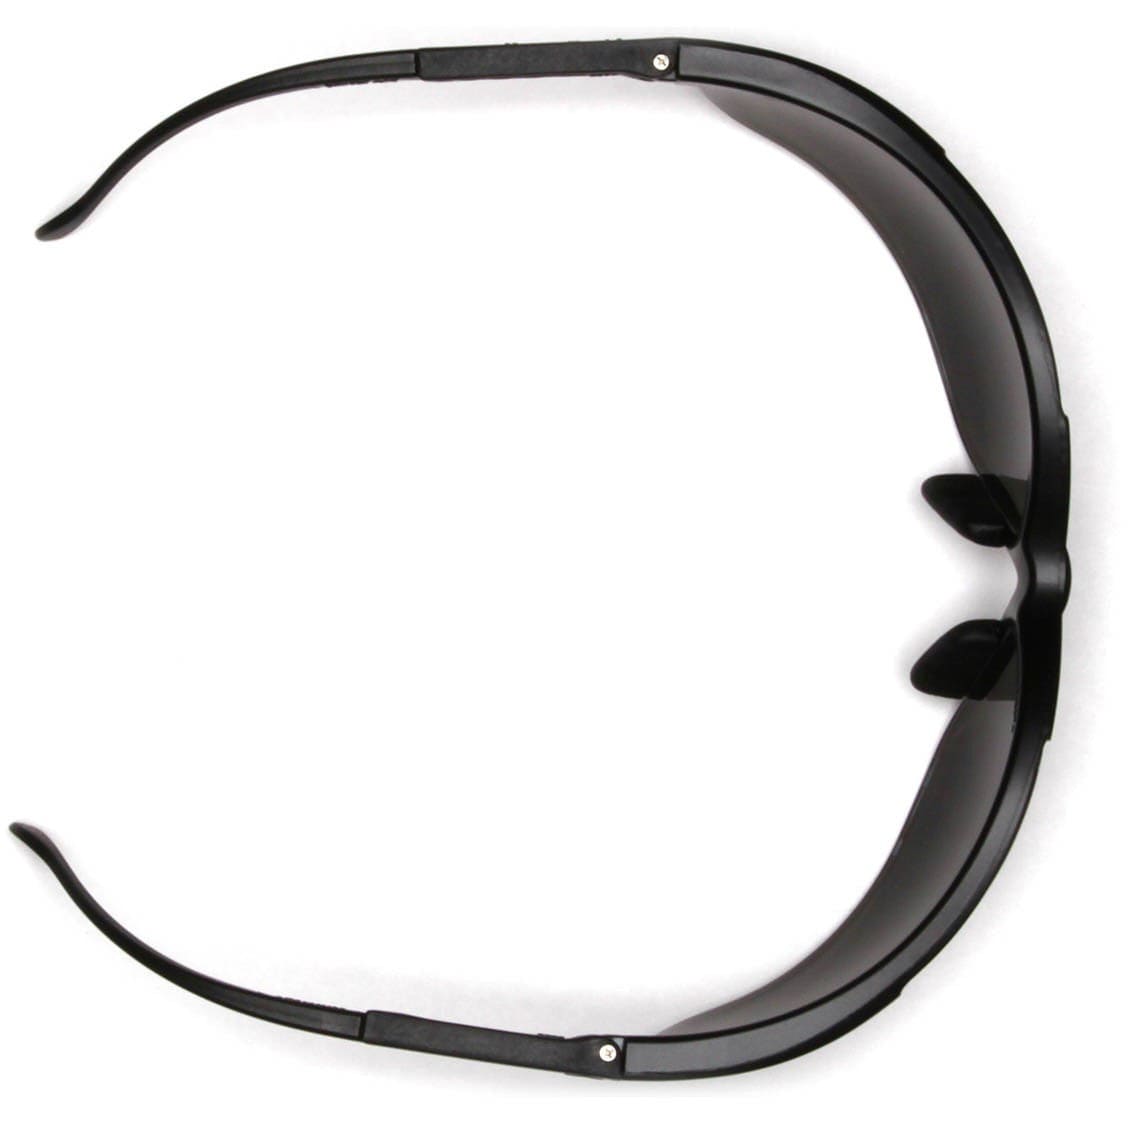 Pyramex Venture 2 Safety Glasses Black Frame Gray Anti-Fog Lens SB1820ST Top View